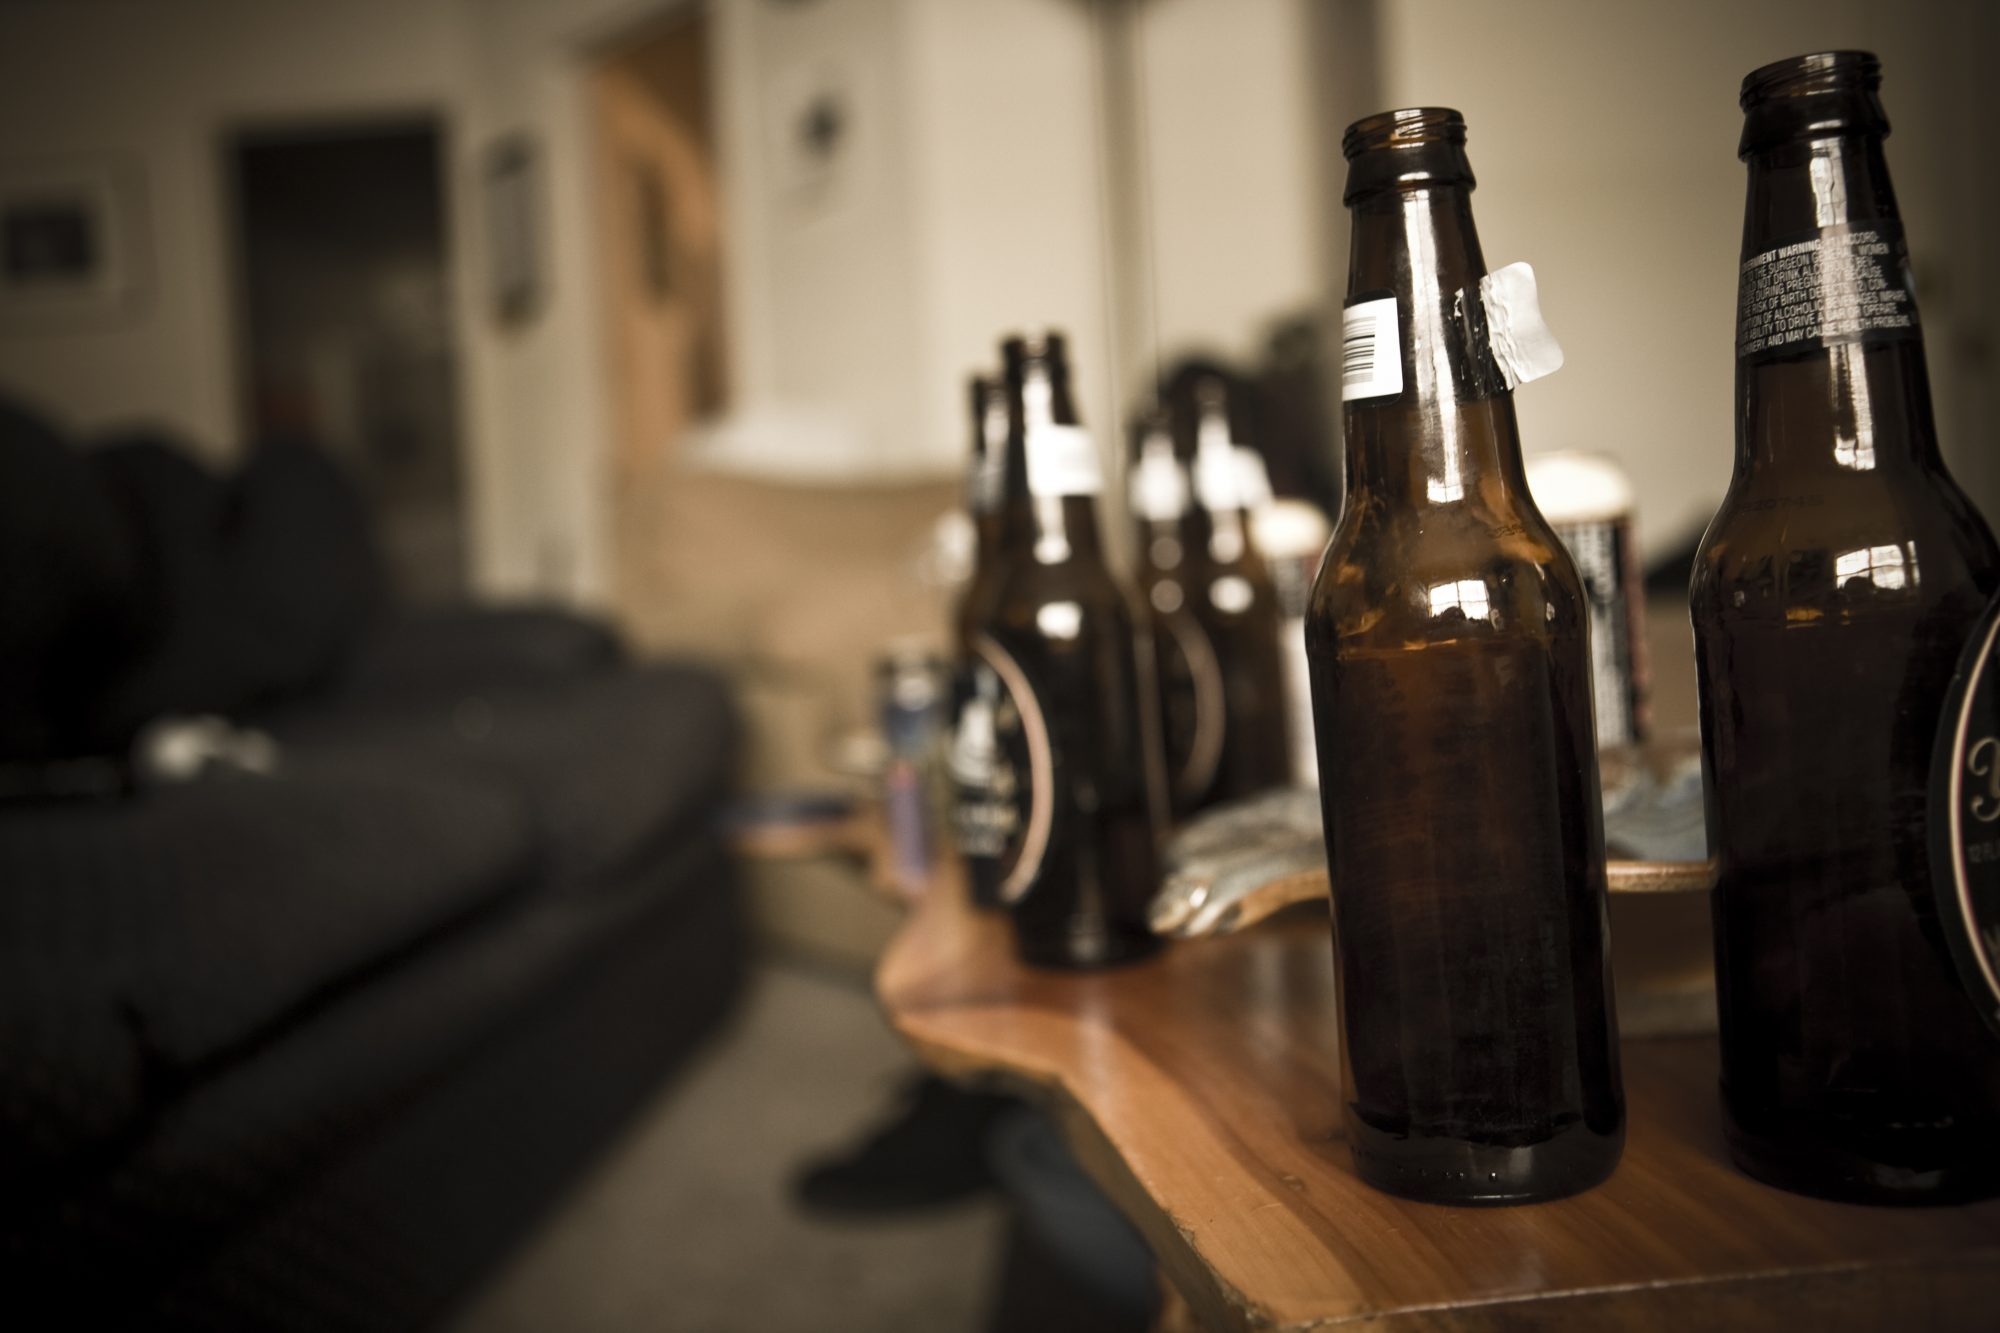 Bottles of beer on table in living room